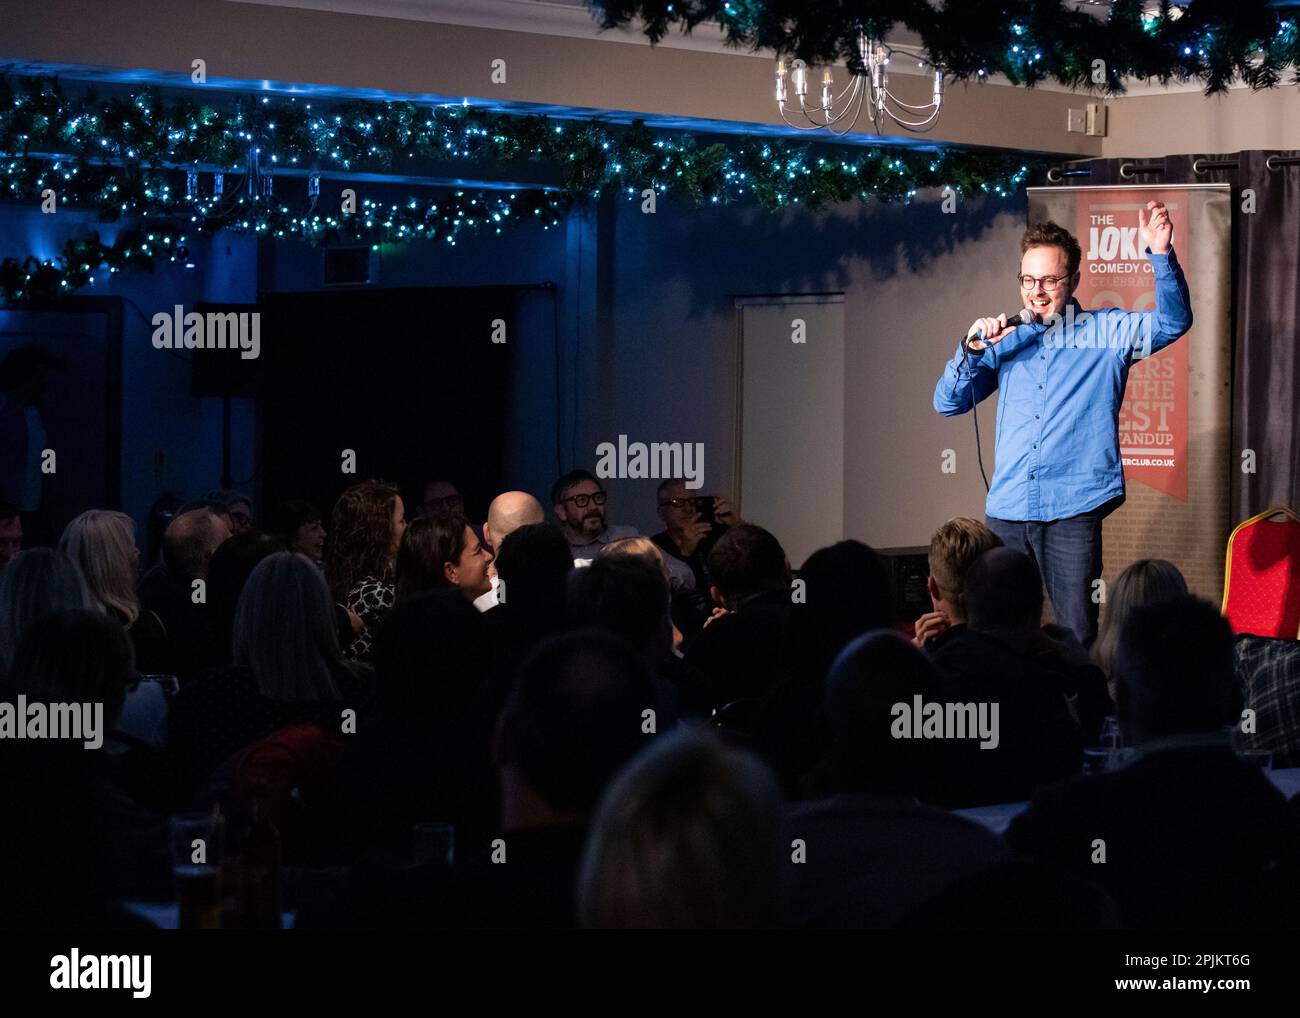 Gareth Richards, Stand-Up Comedian, Joker Comedy Club, Southend-on-Sea, Essex © Clarissa Debenham / Alamy Stock Photo